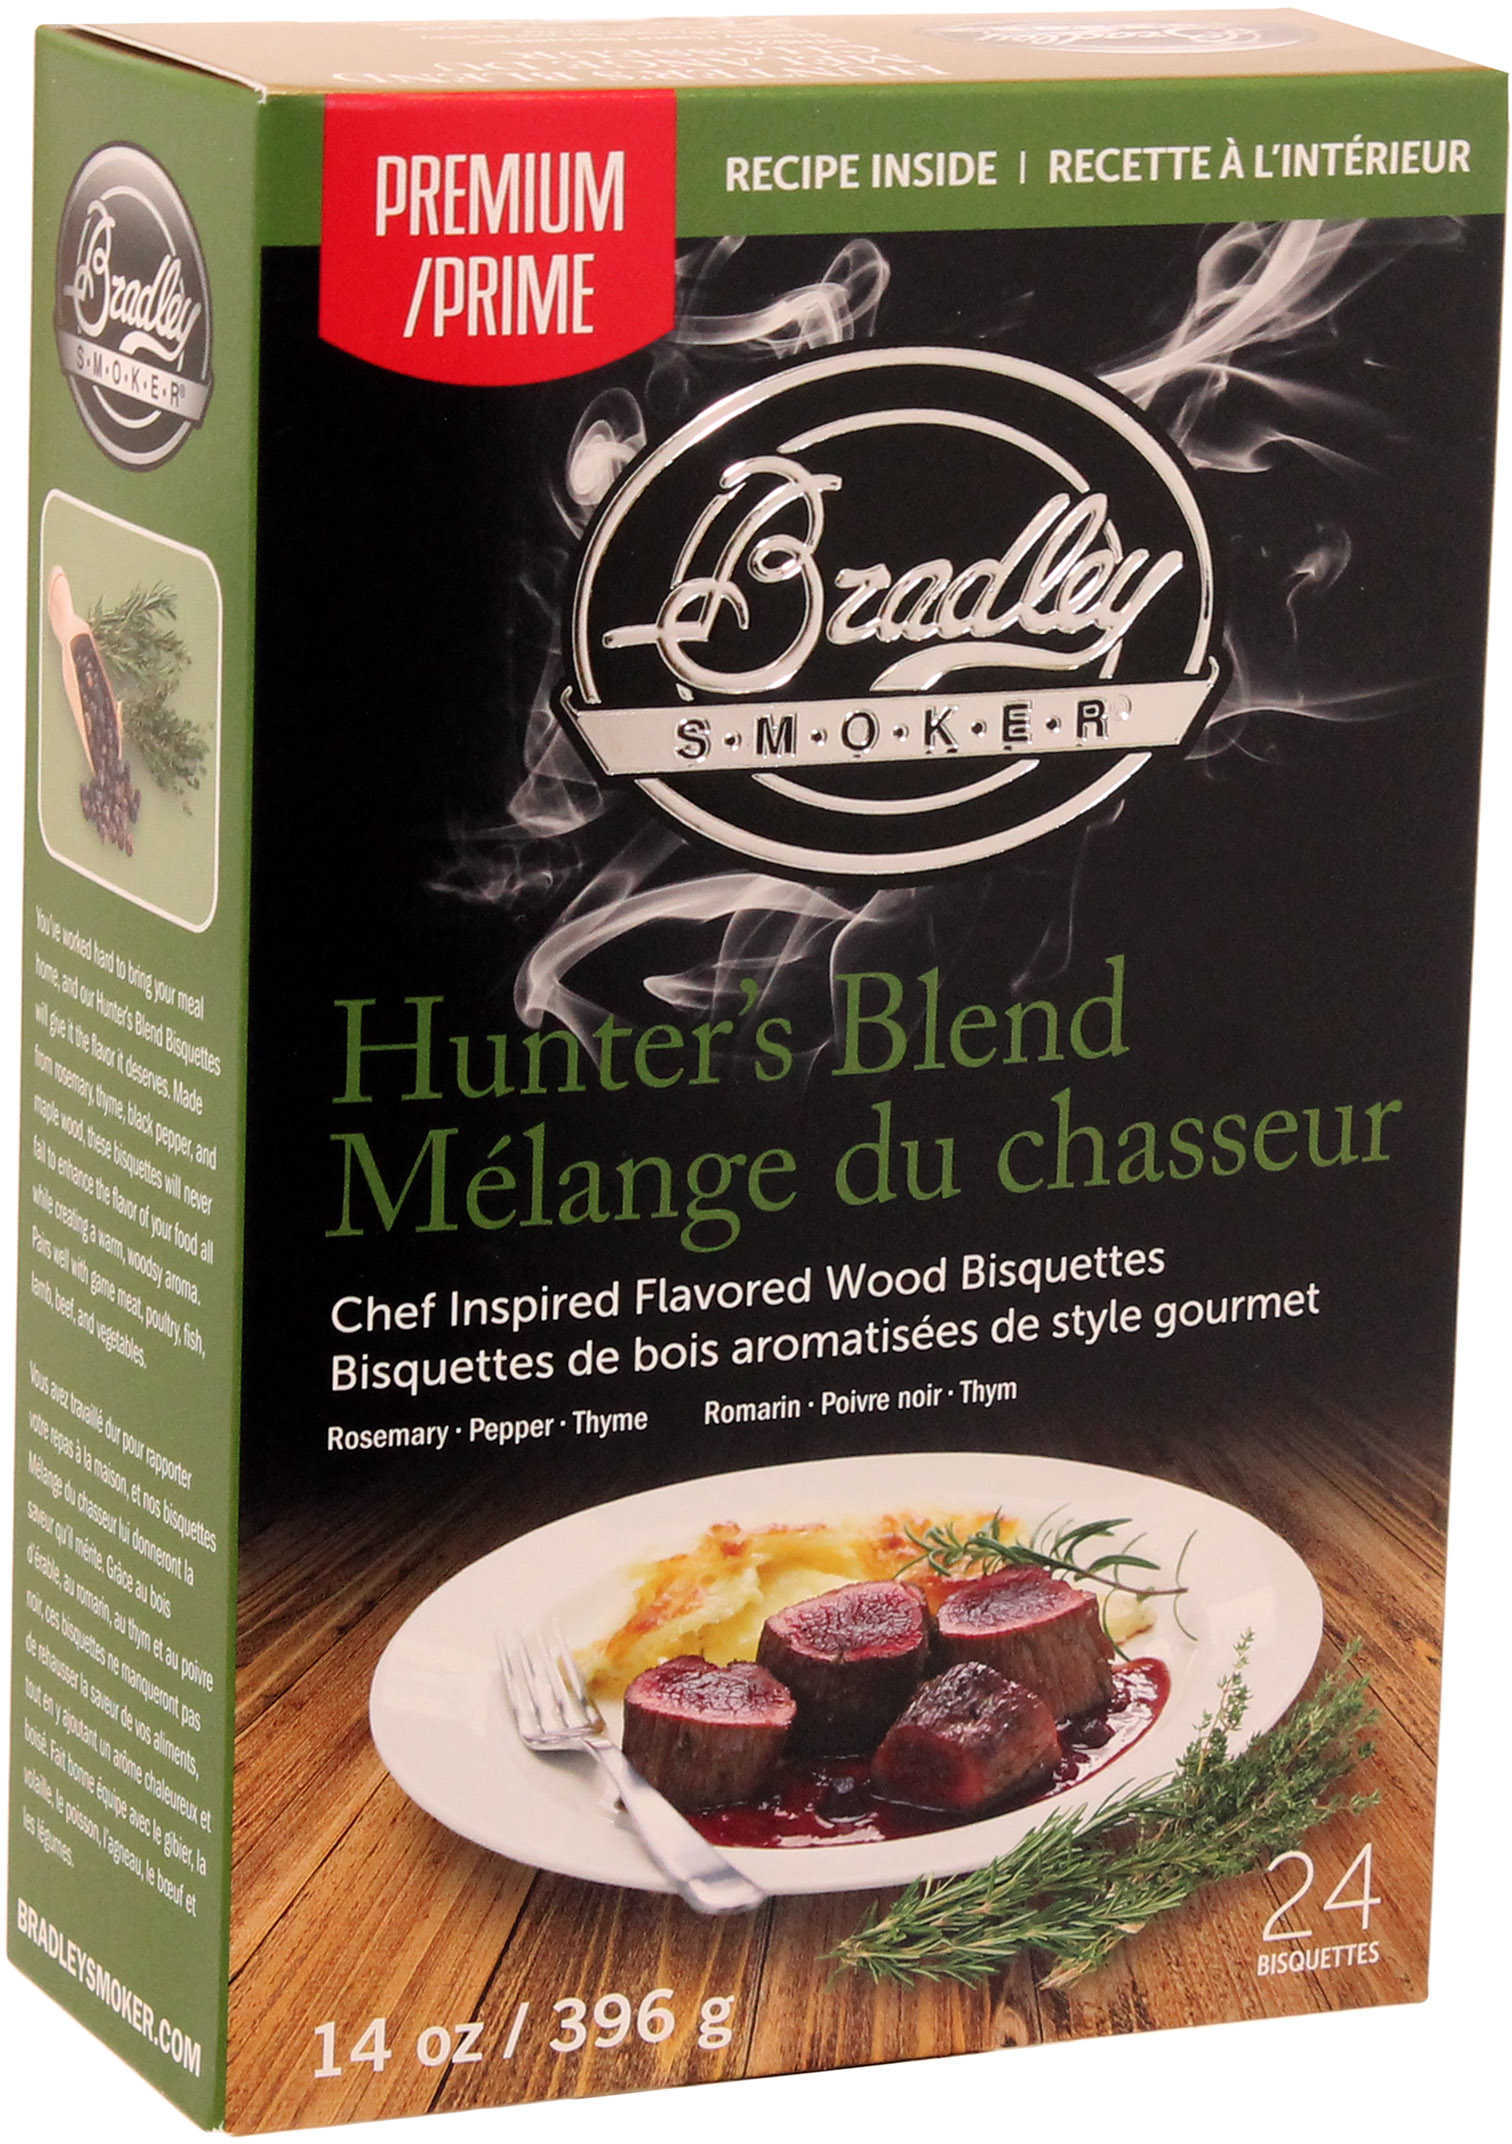 Bradley Smoker HUNTER'S Blend BISQUETTES 24 Pack